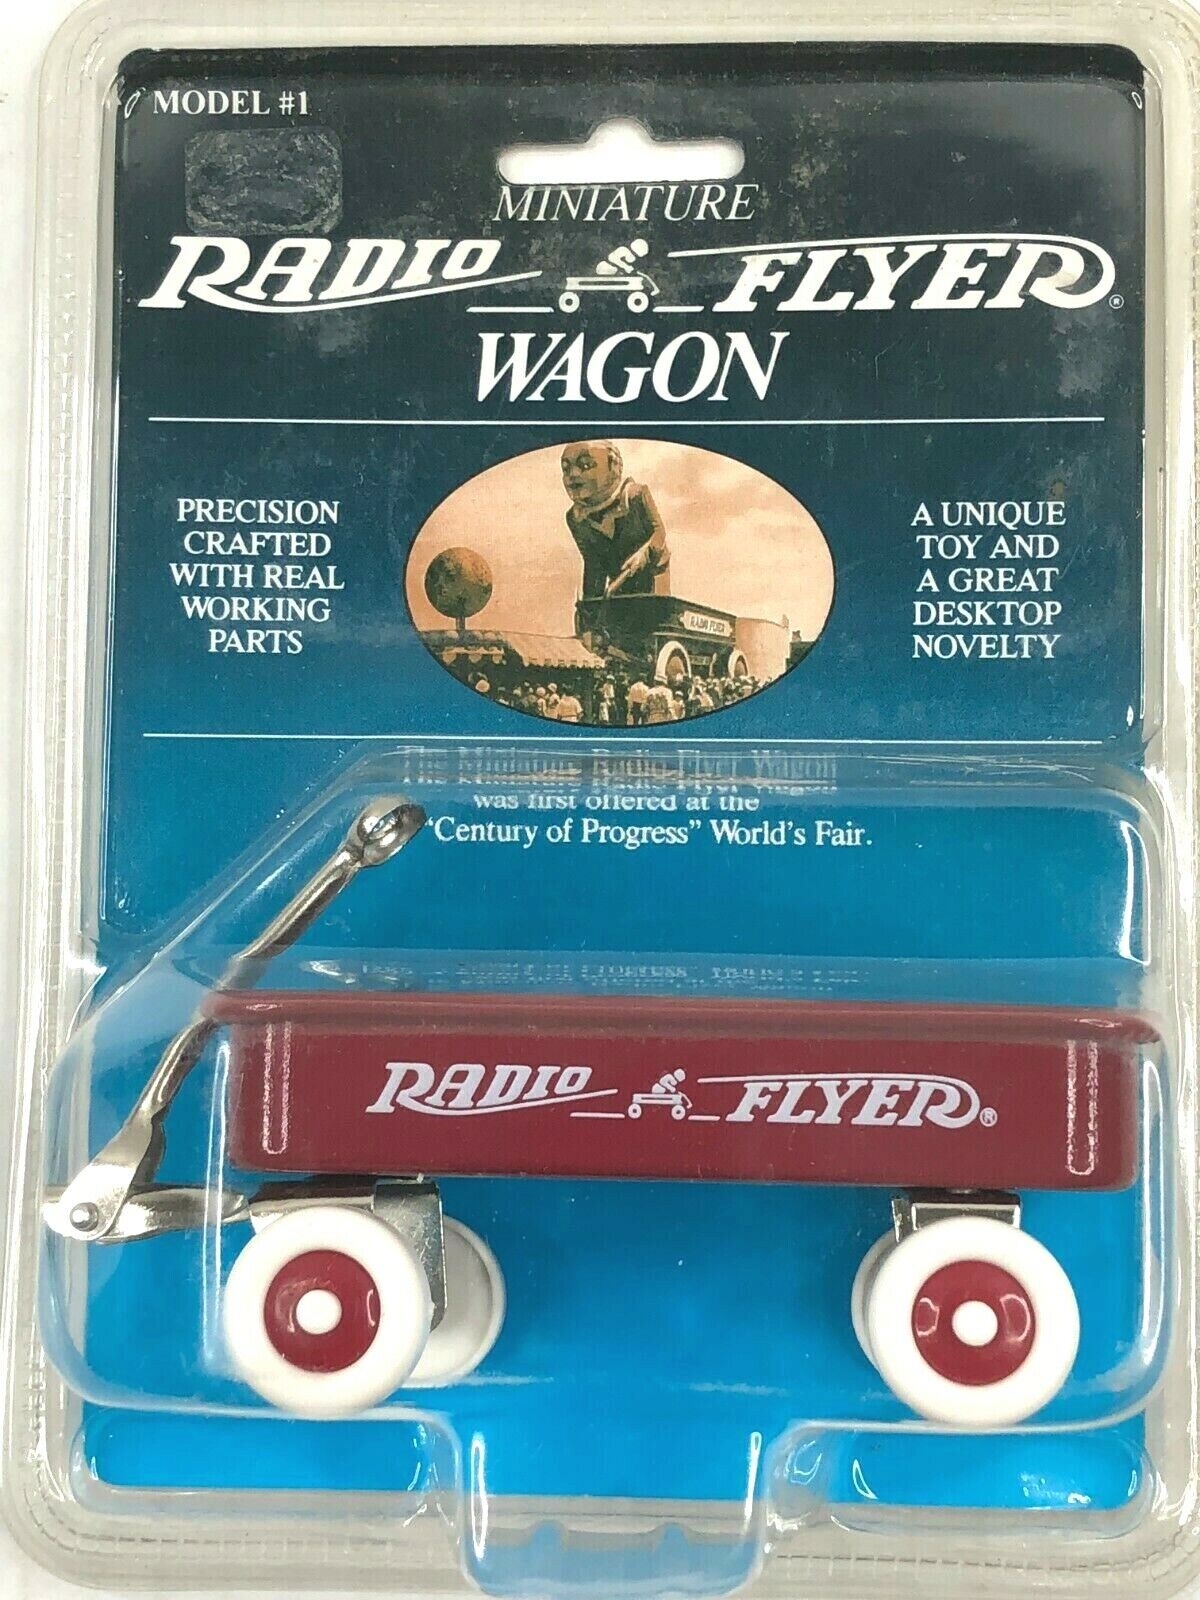 NEW Vintage 1990 Radio Flyer model #1 Miniature Red Wagon